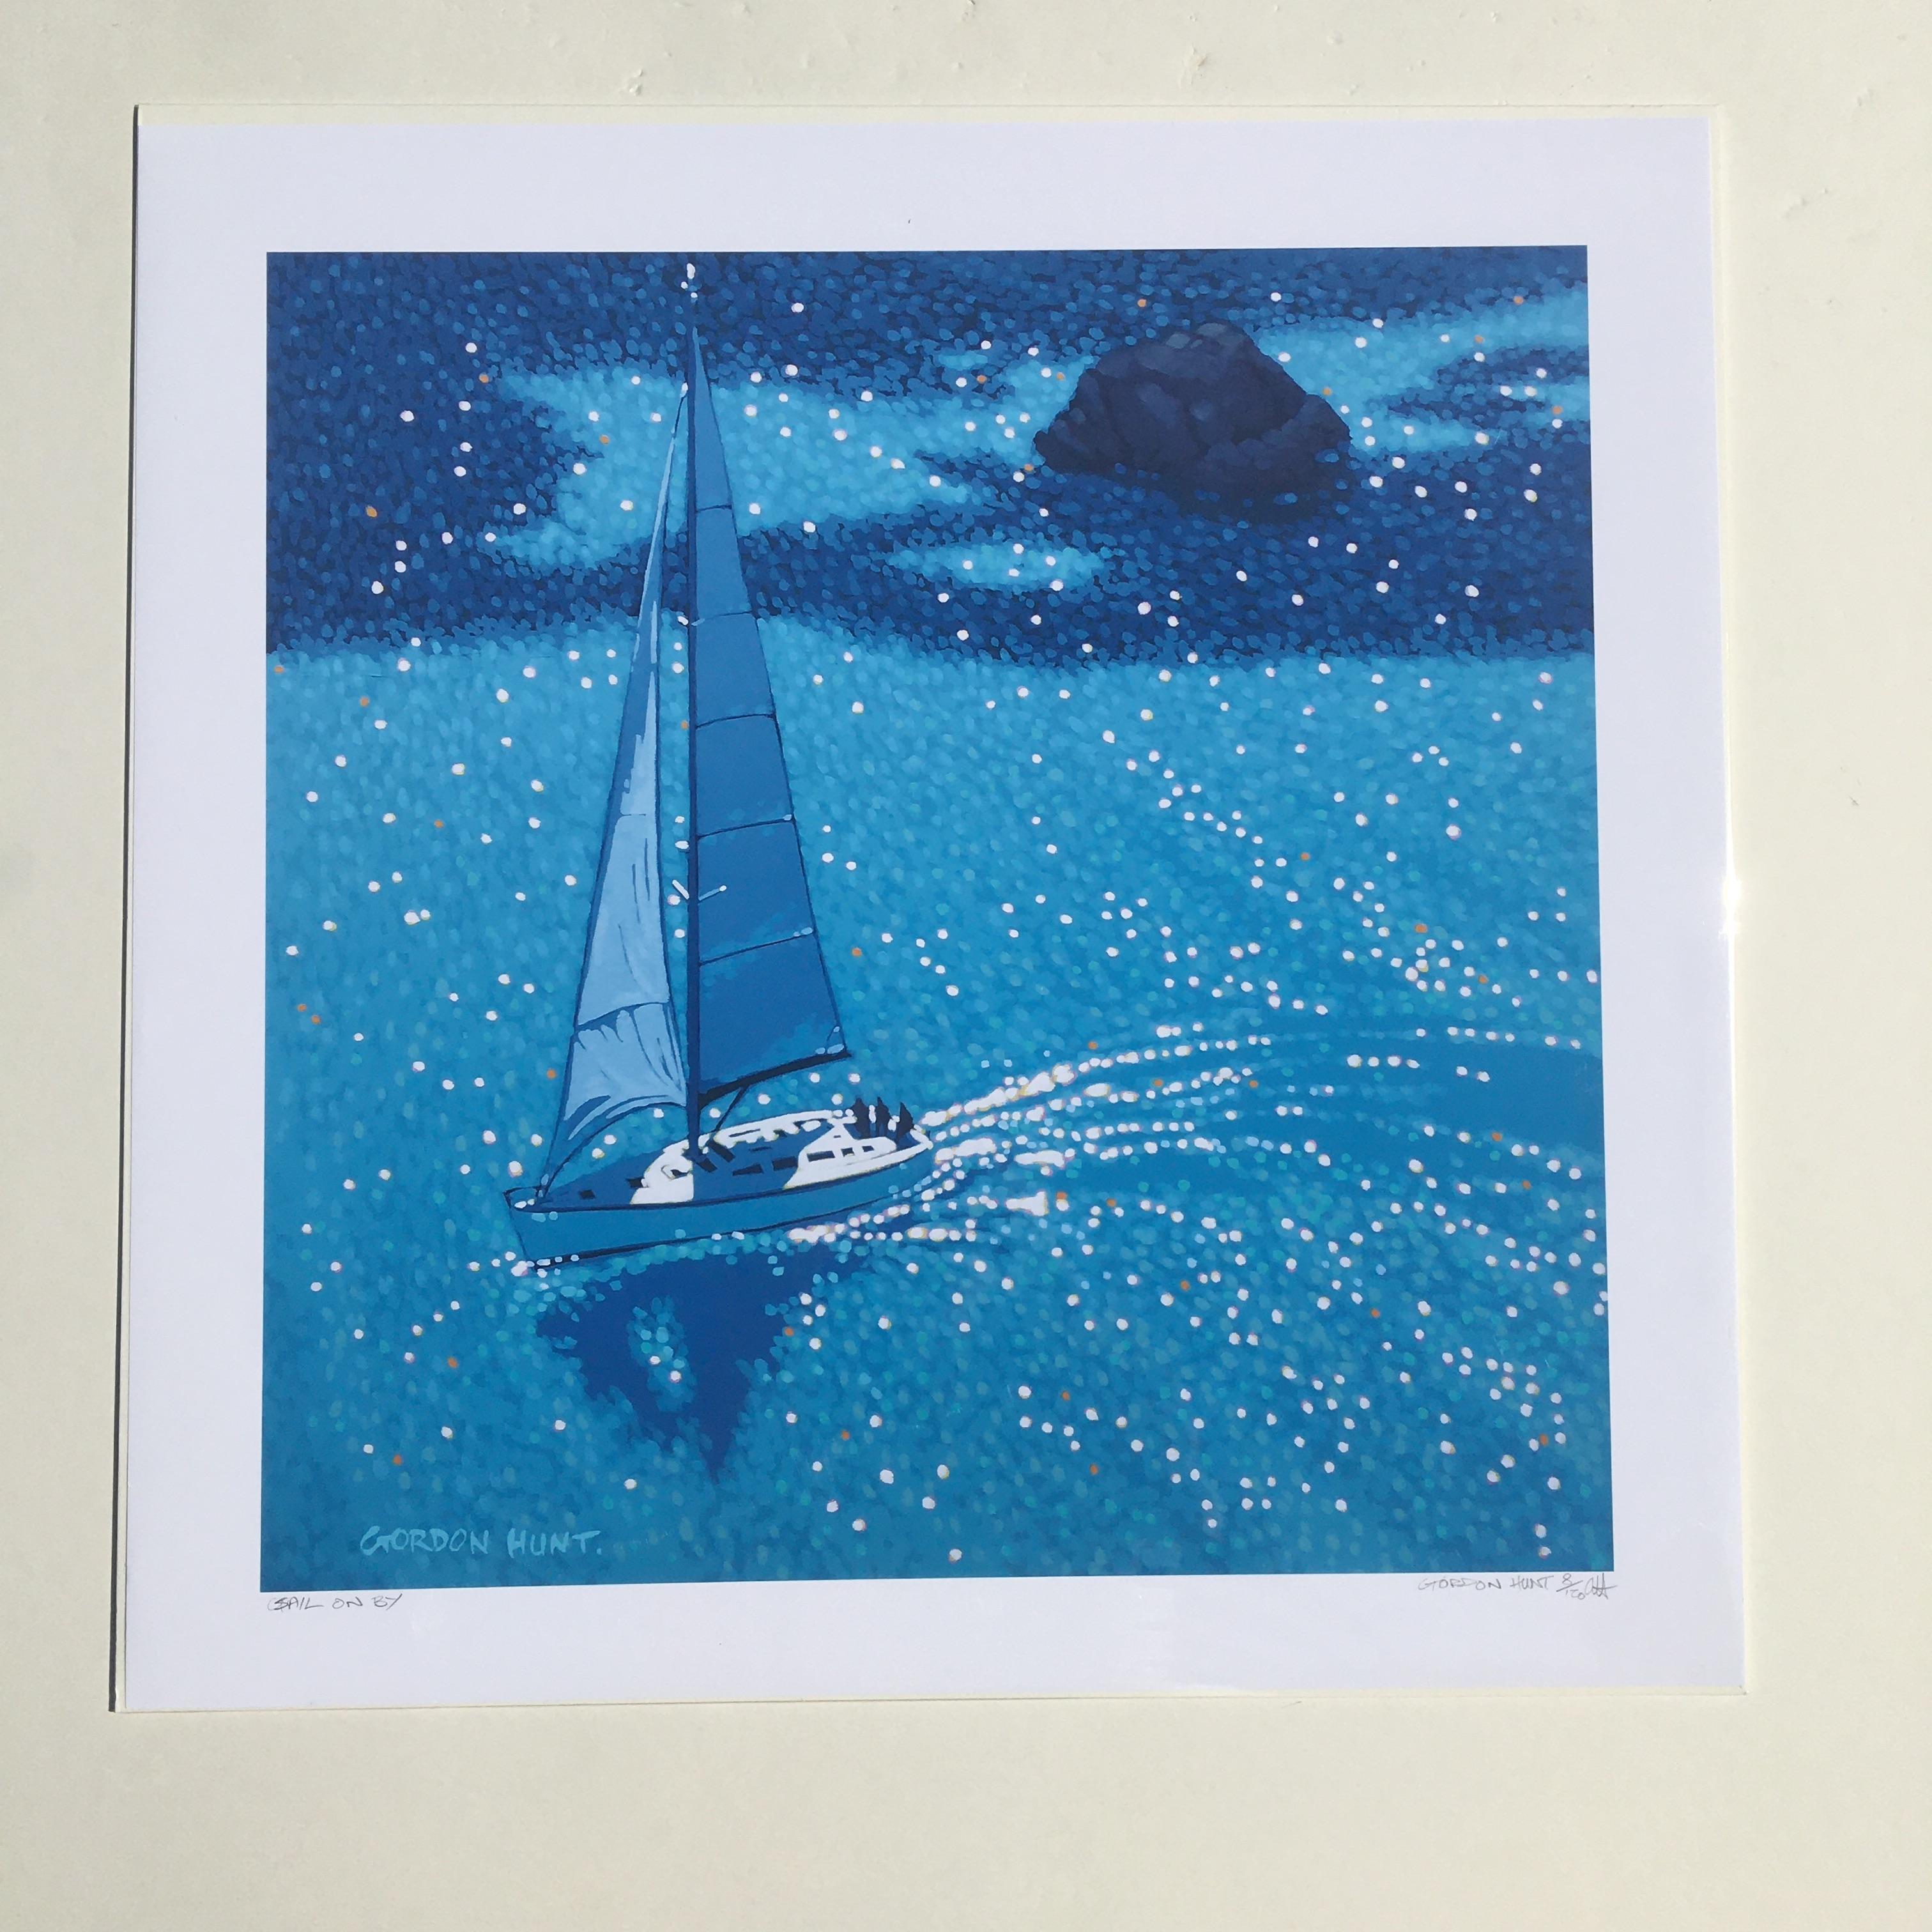 Gordon Hunt, Sail on by Cornwall coast, Seascape Art, Sailing Art, Art Online 1